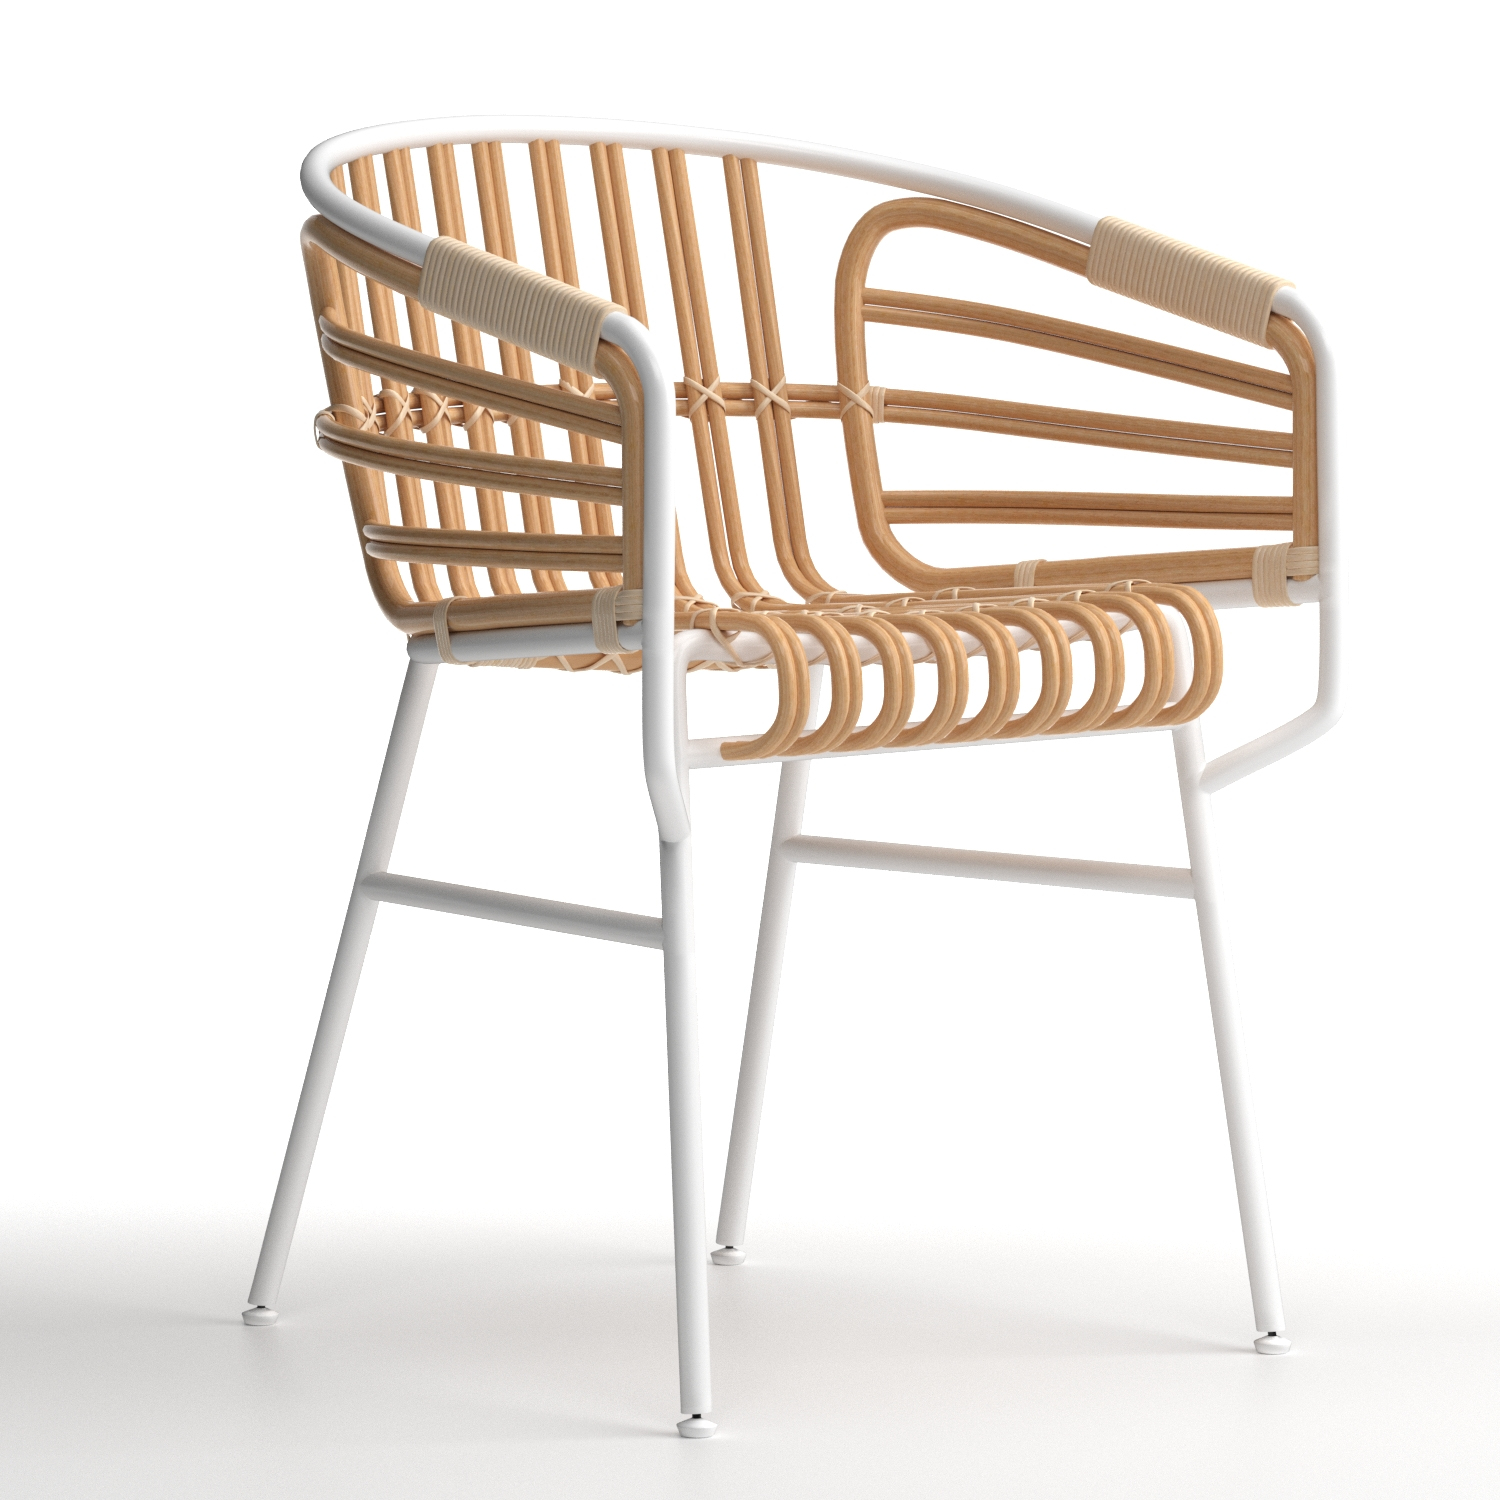 Chair rattan raphia 3D model - TurboSquid 1569486